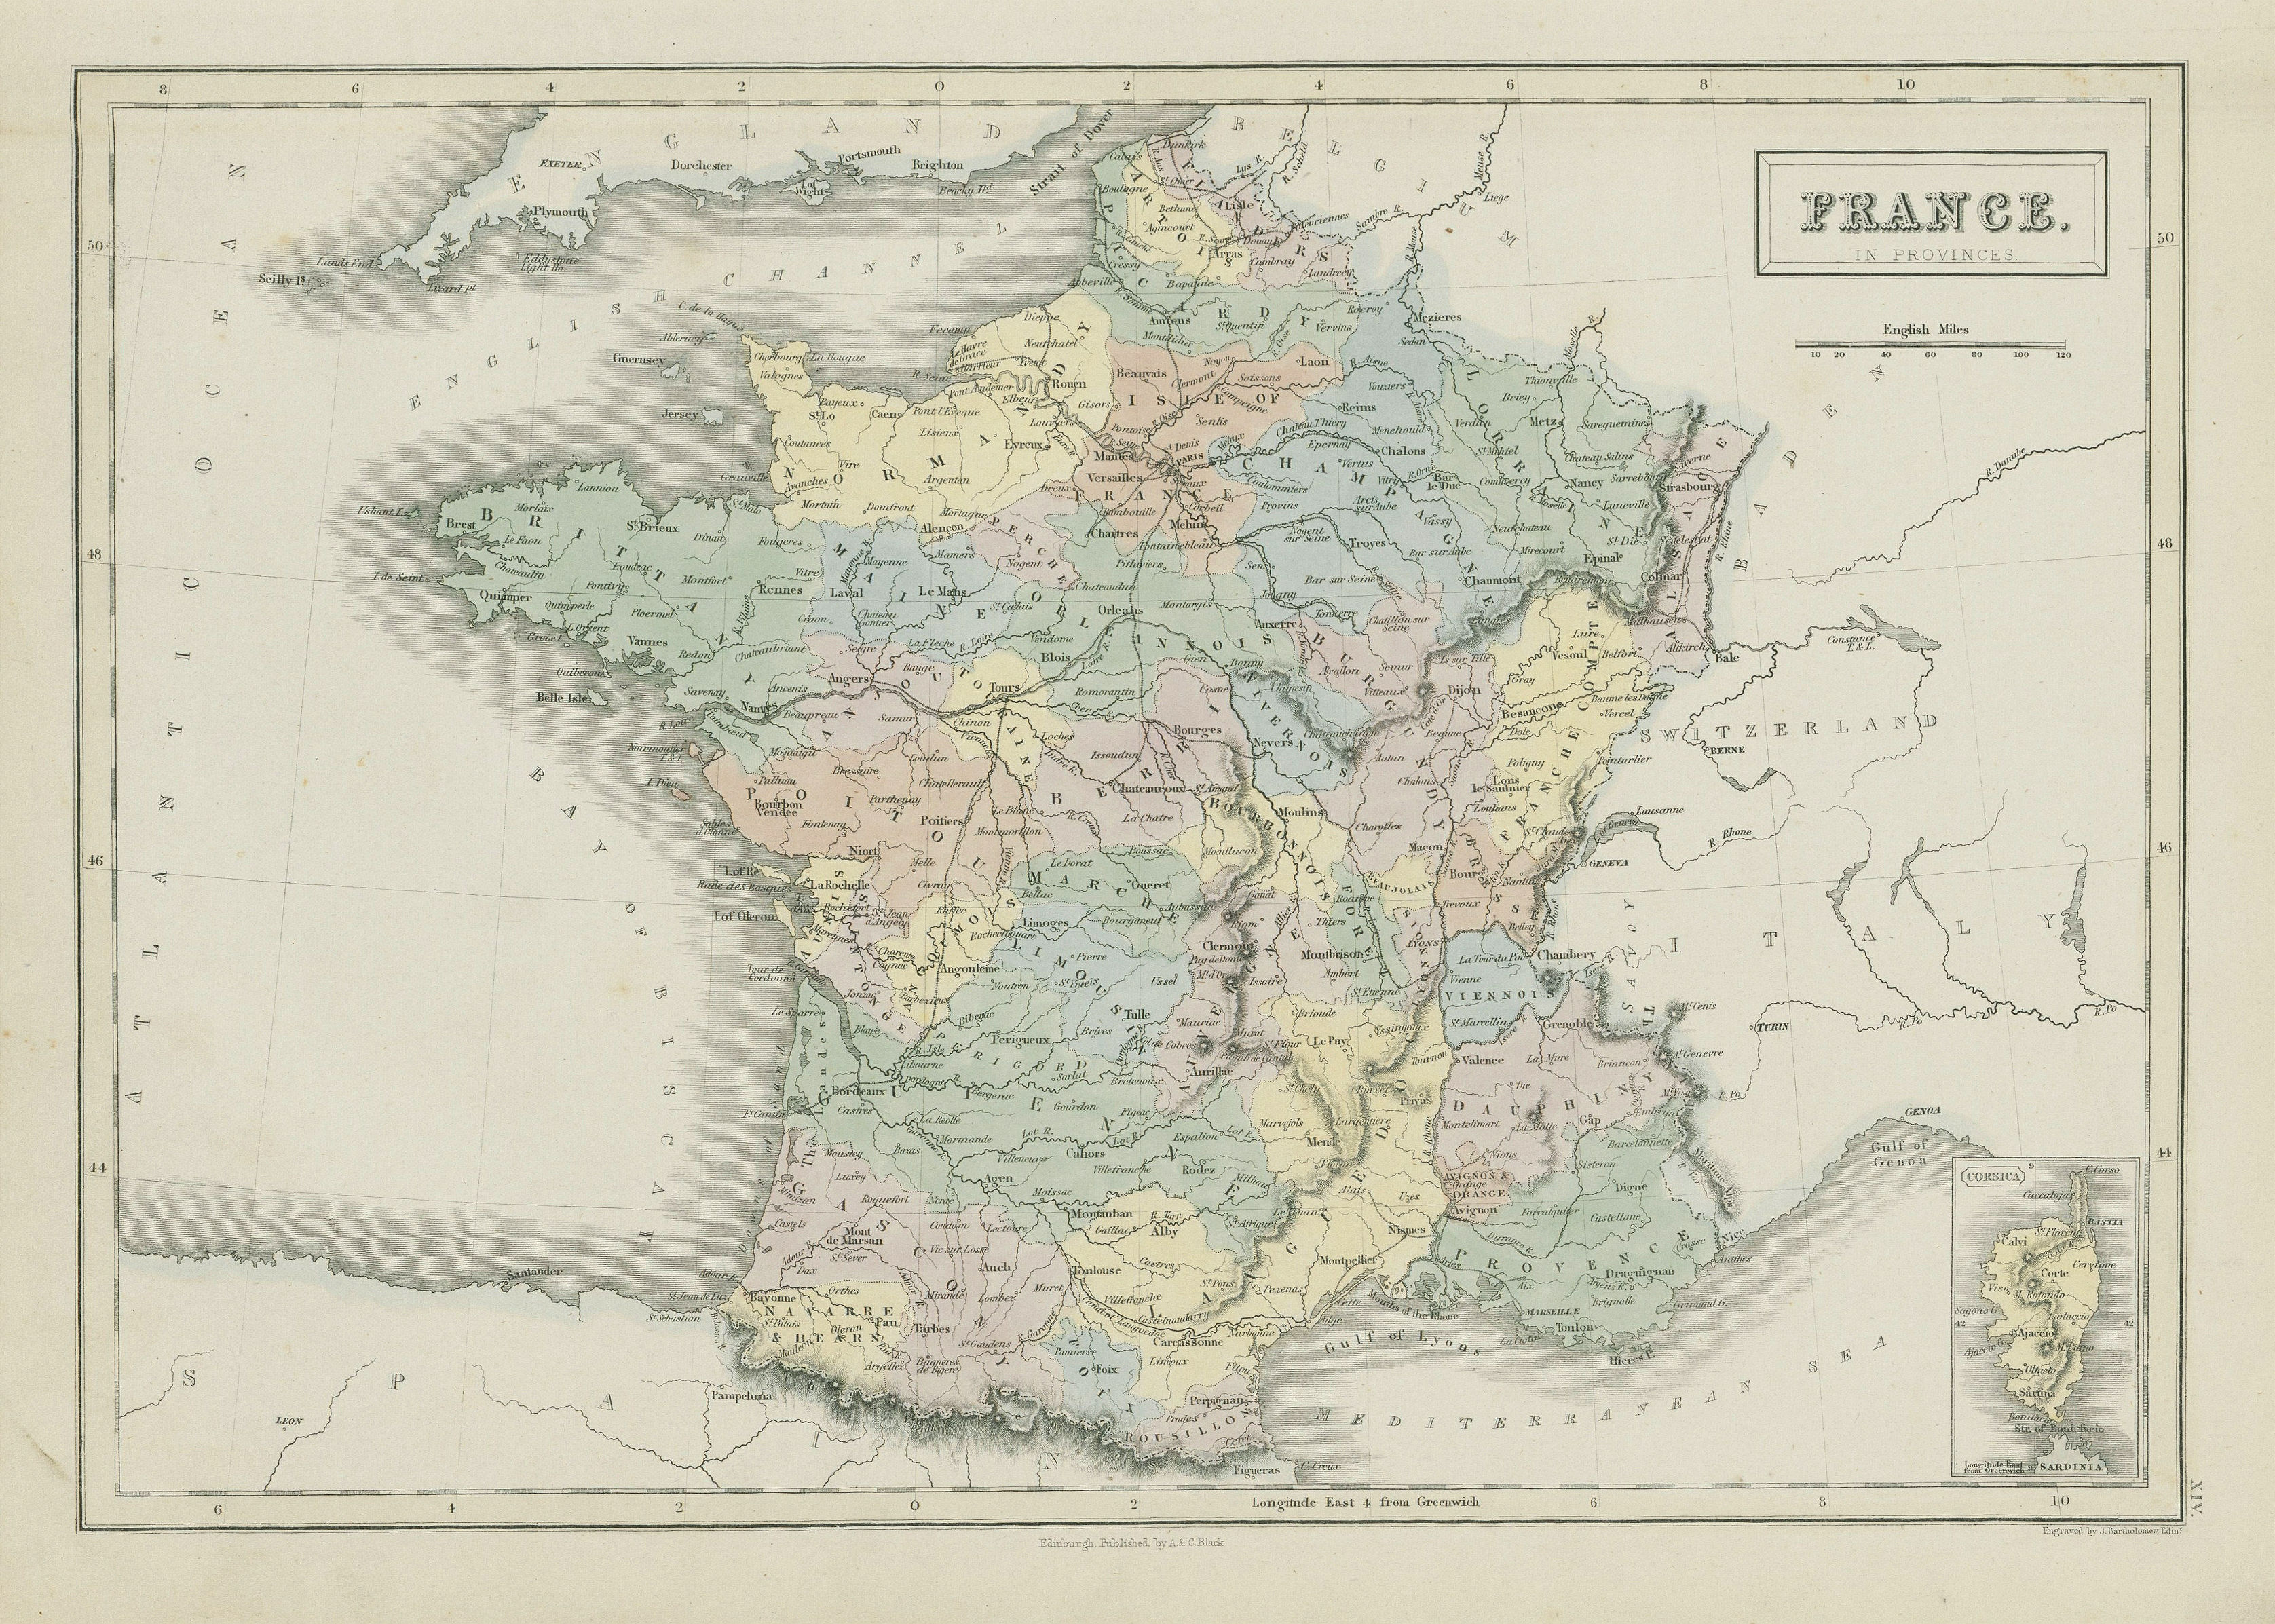 Associate Product France in provinces showing railways. JOHN BARTHOLOMEW 1856 old antique map